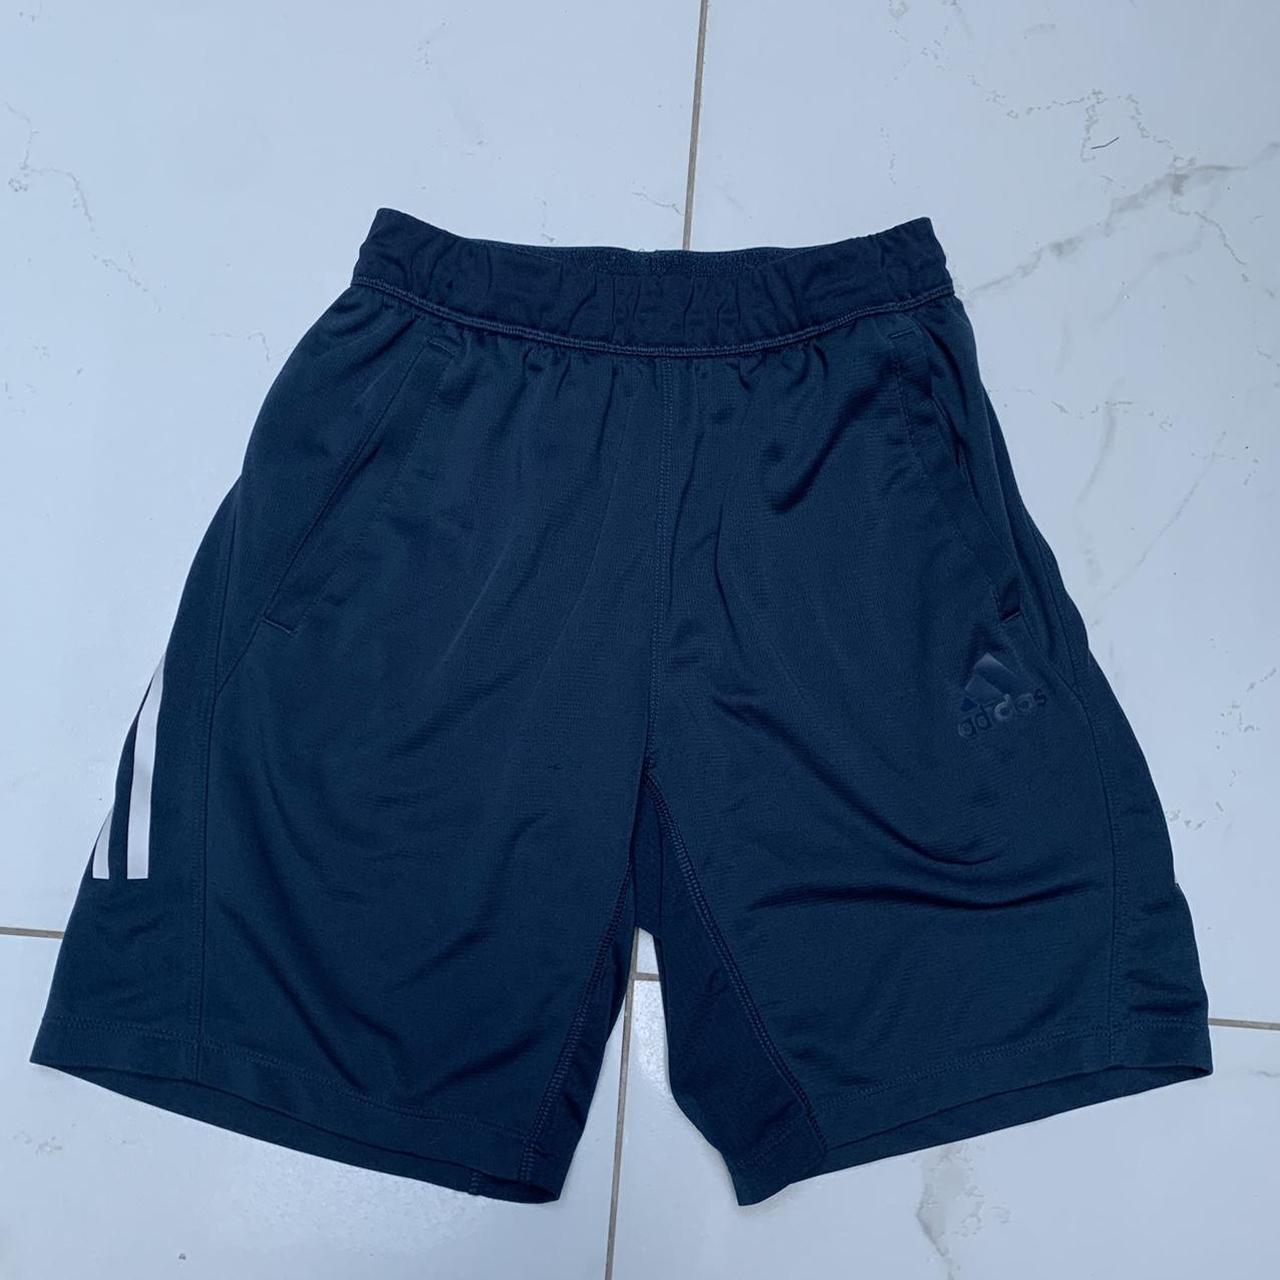 Men's Blue and White Shorts | Depop